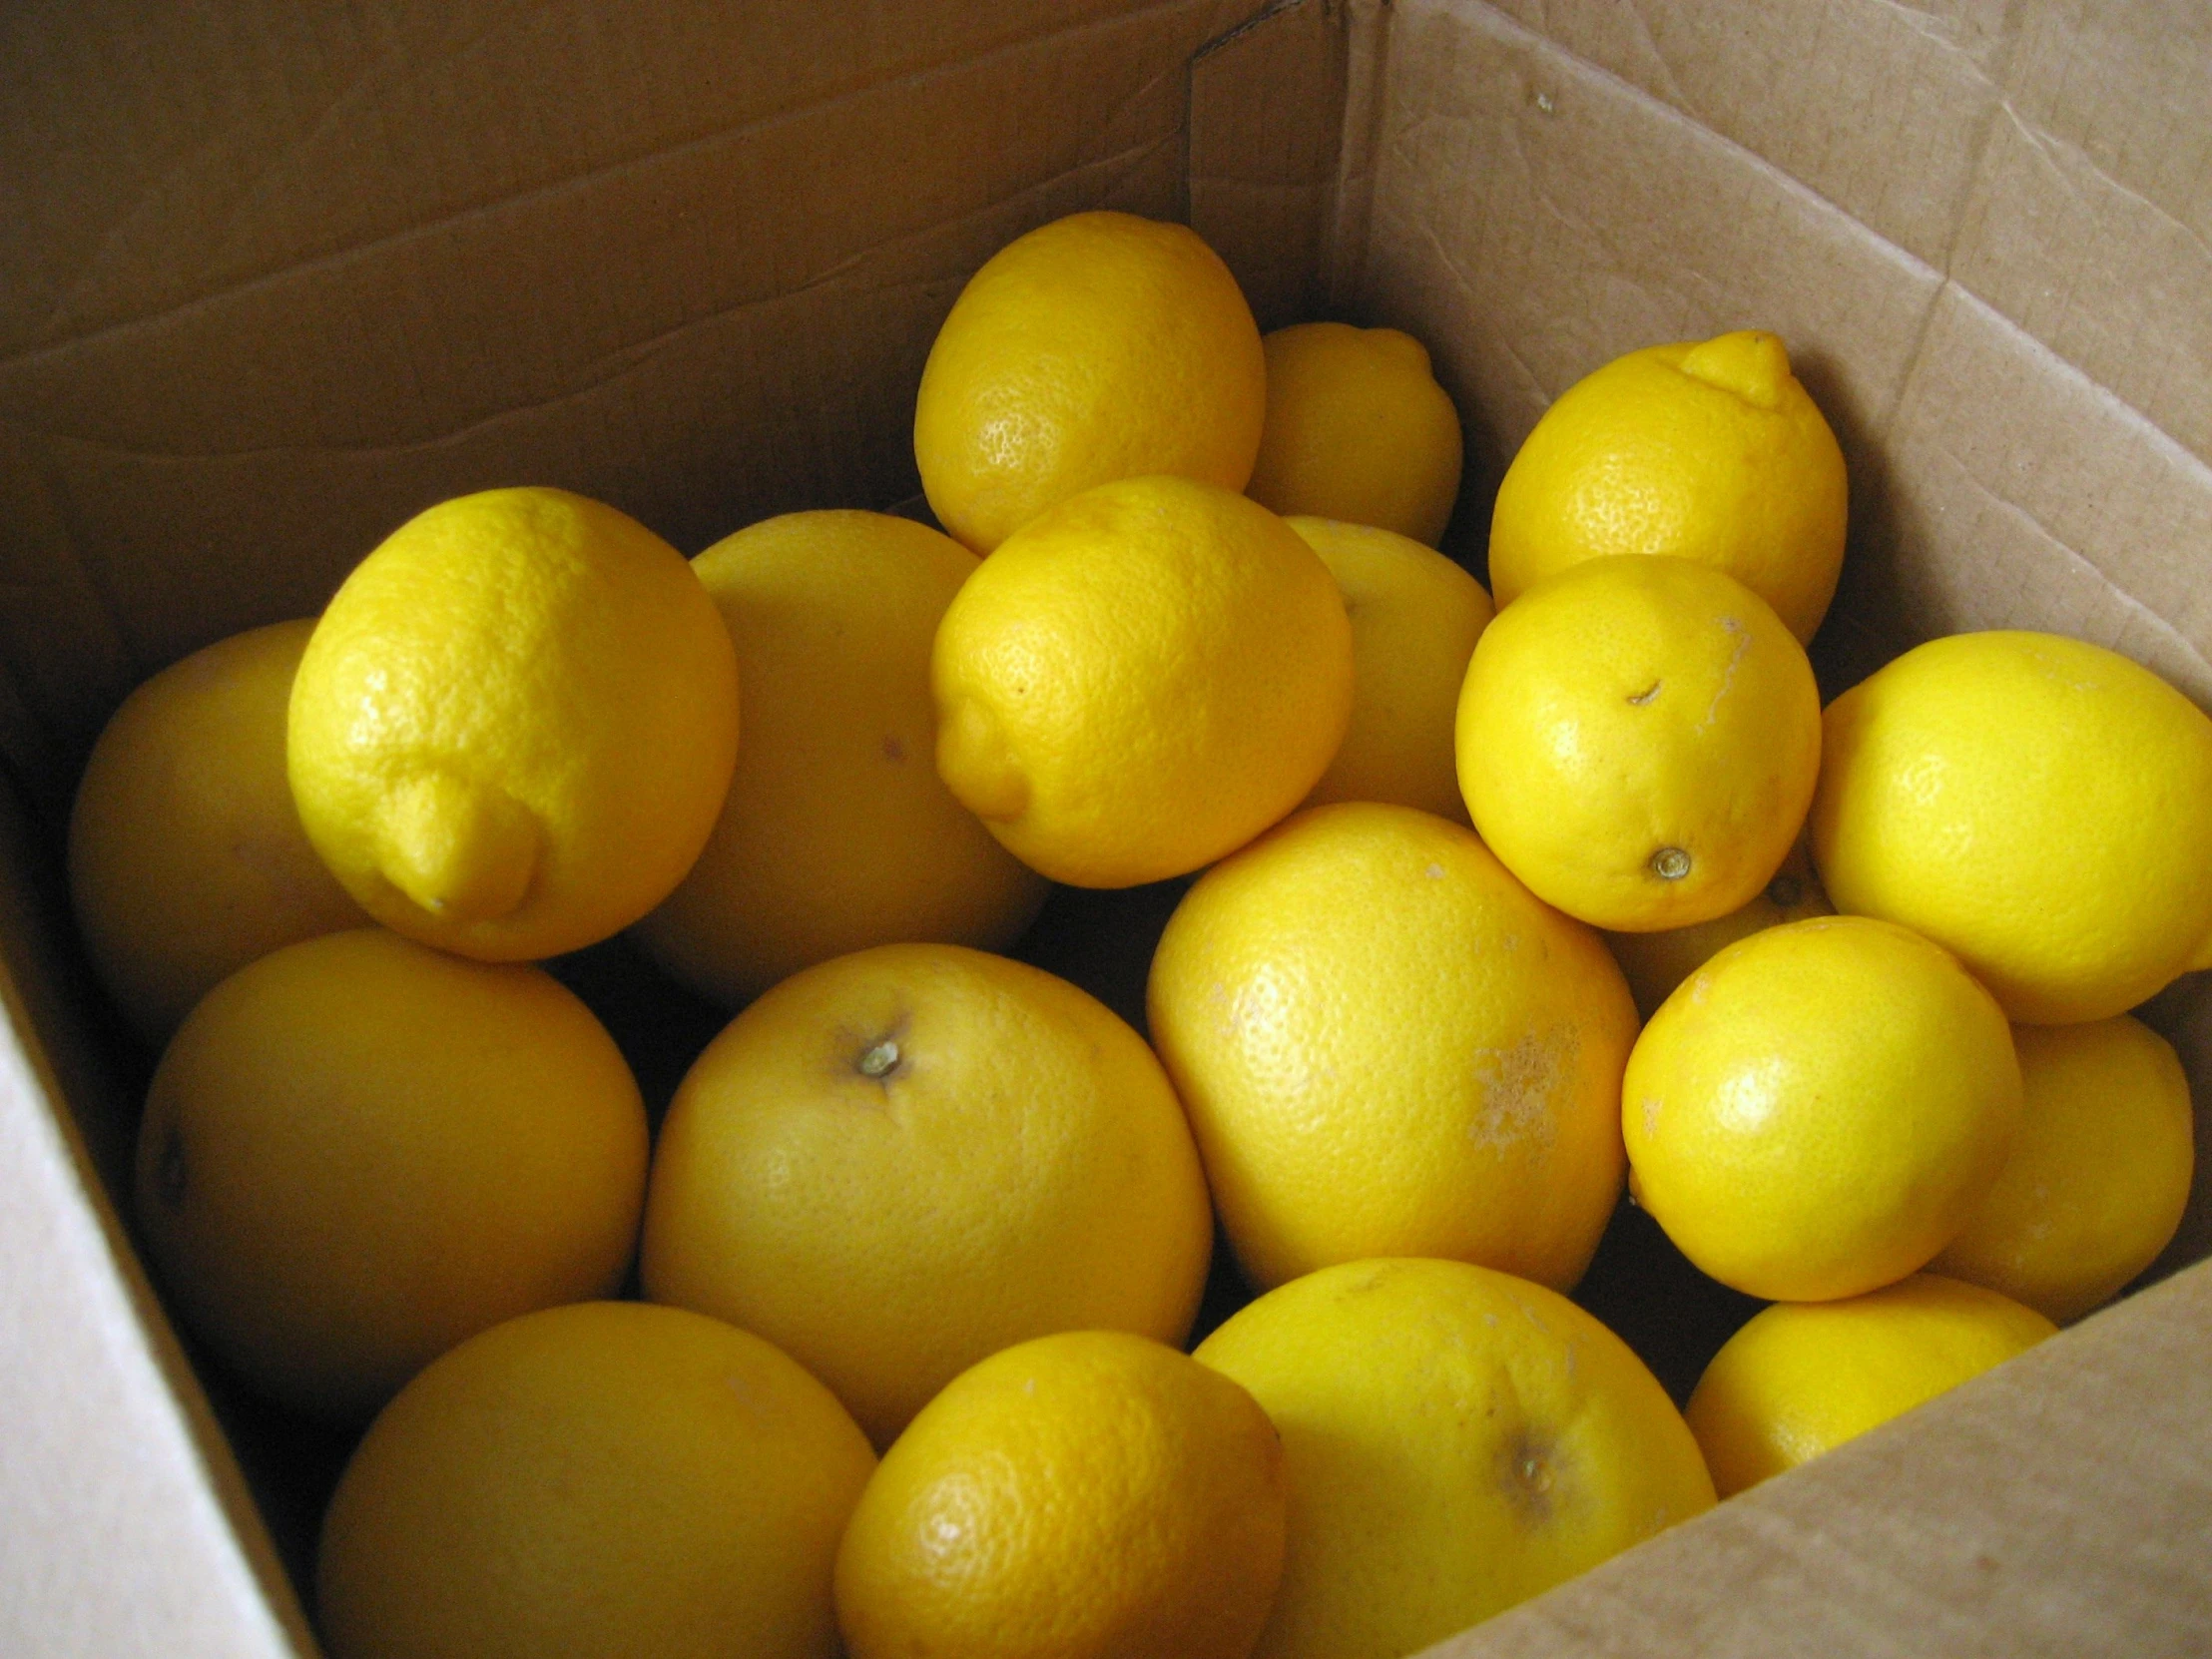 a group of lemons sitting inside of a cardboard box